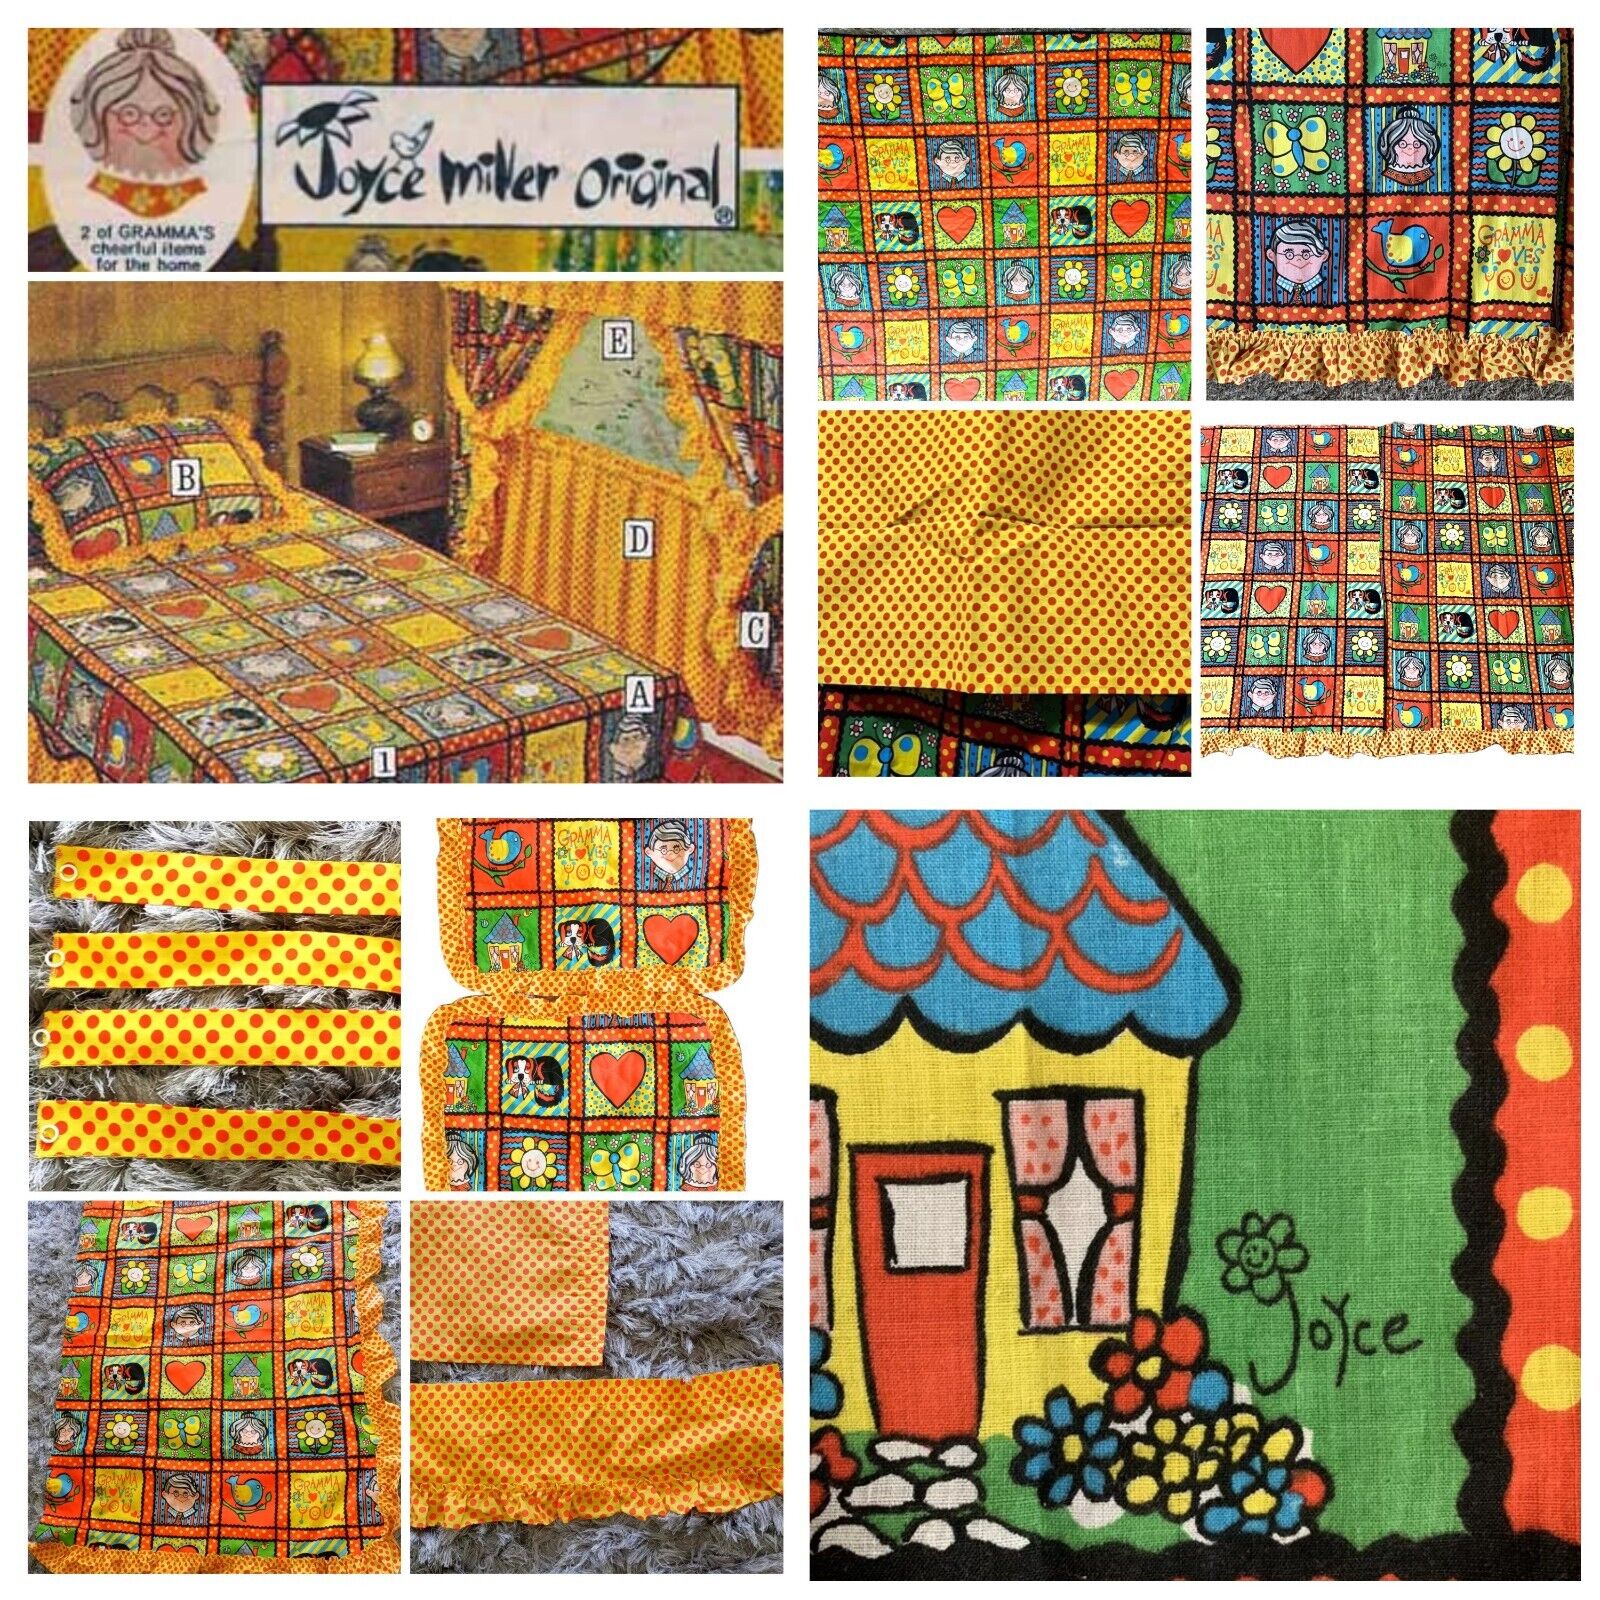 Vtg 60’s Joyce Miller Gramma Love You Kid Complete set Full Bedspread Curtains +